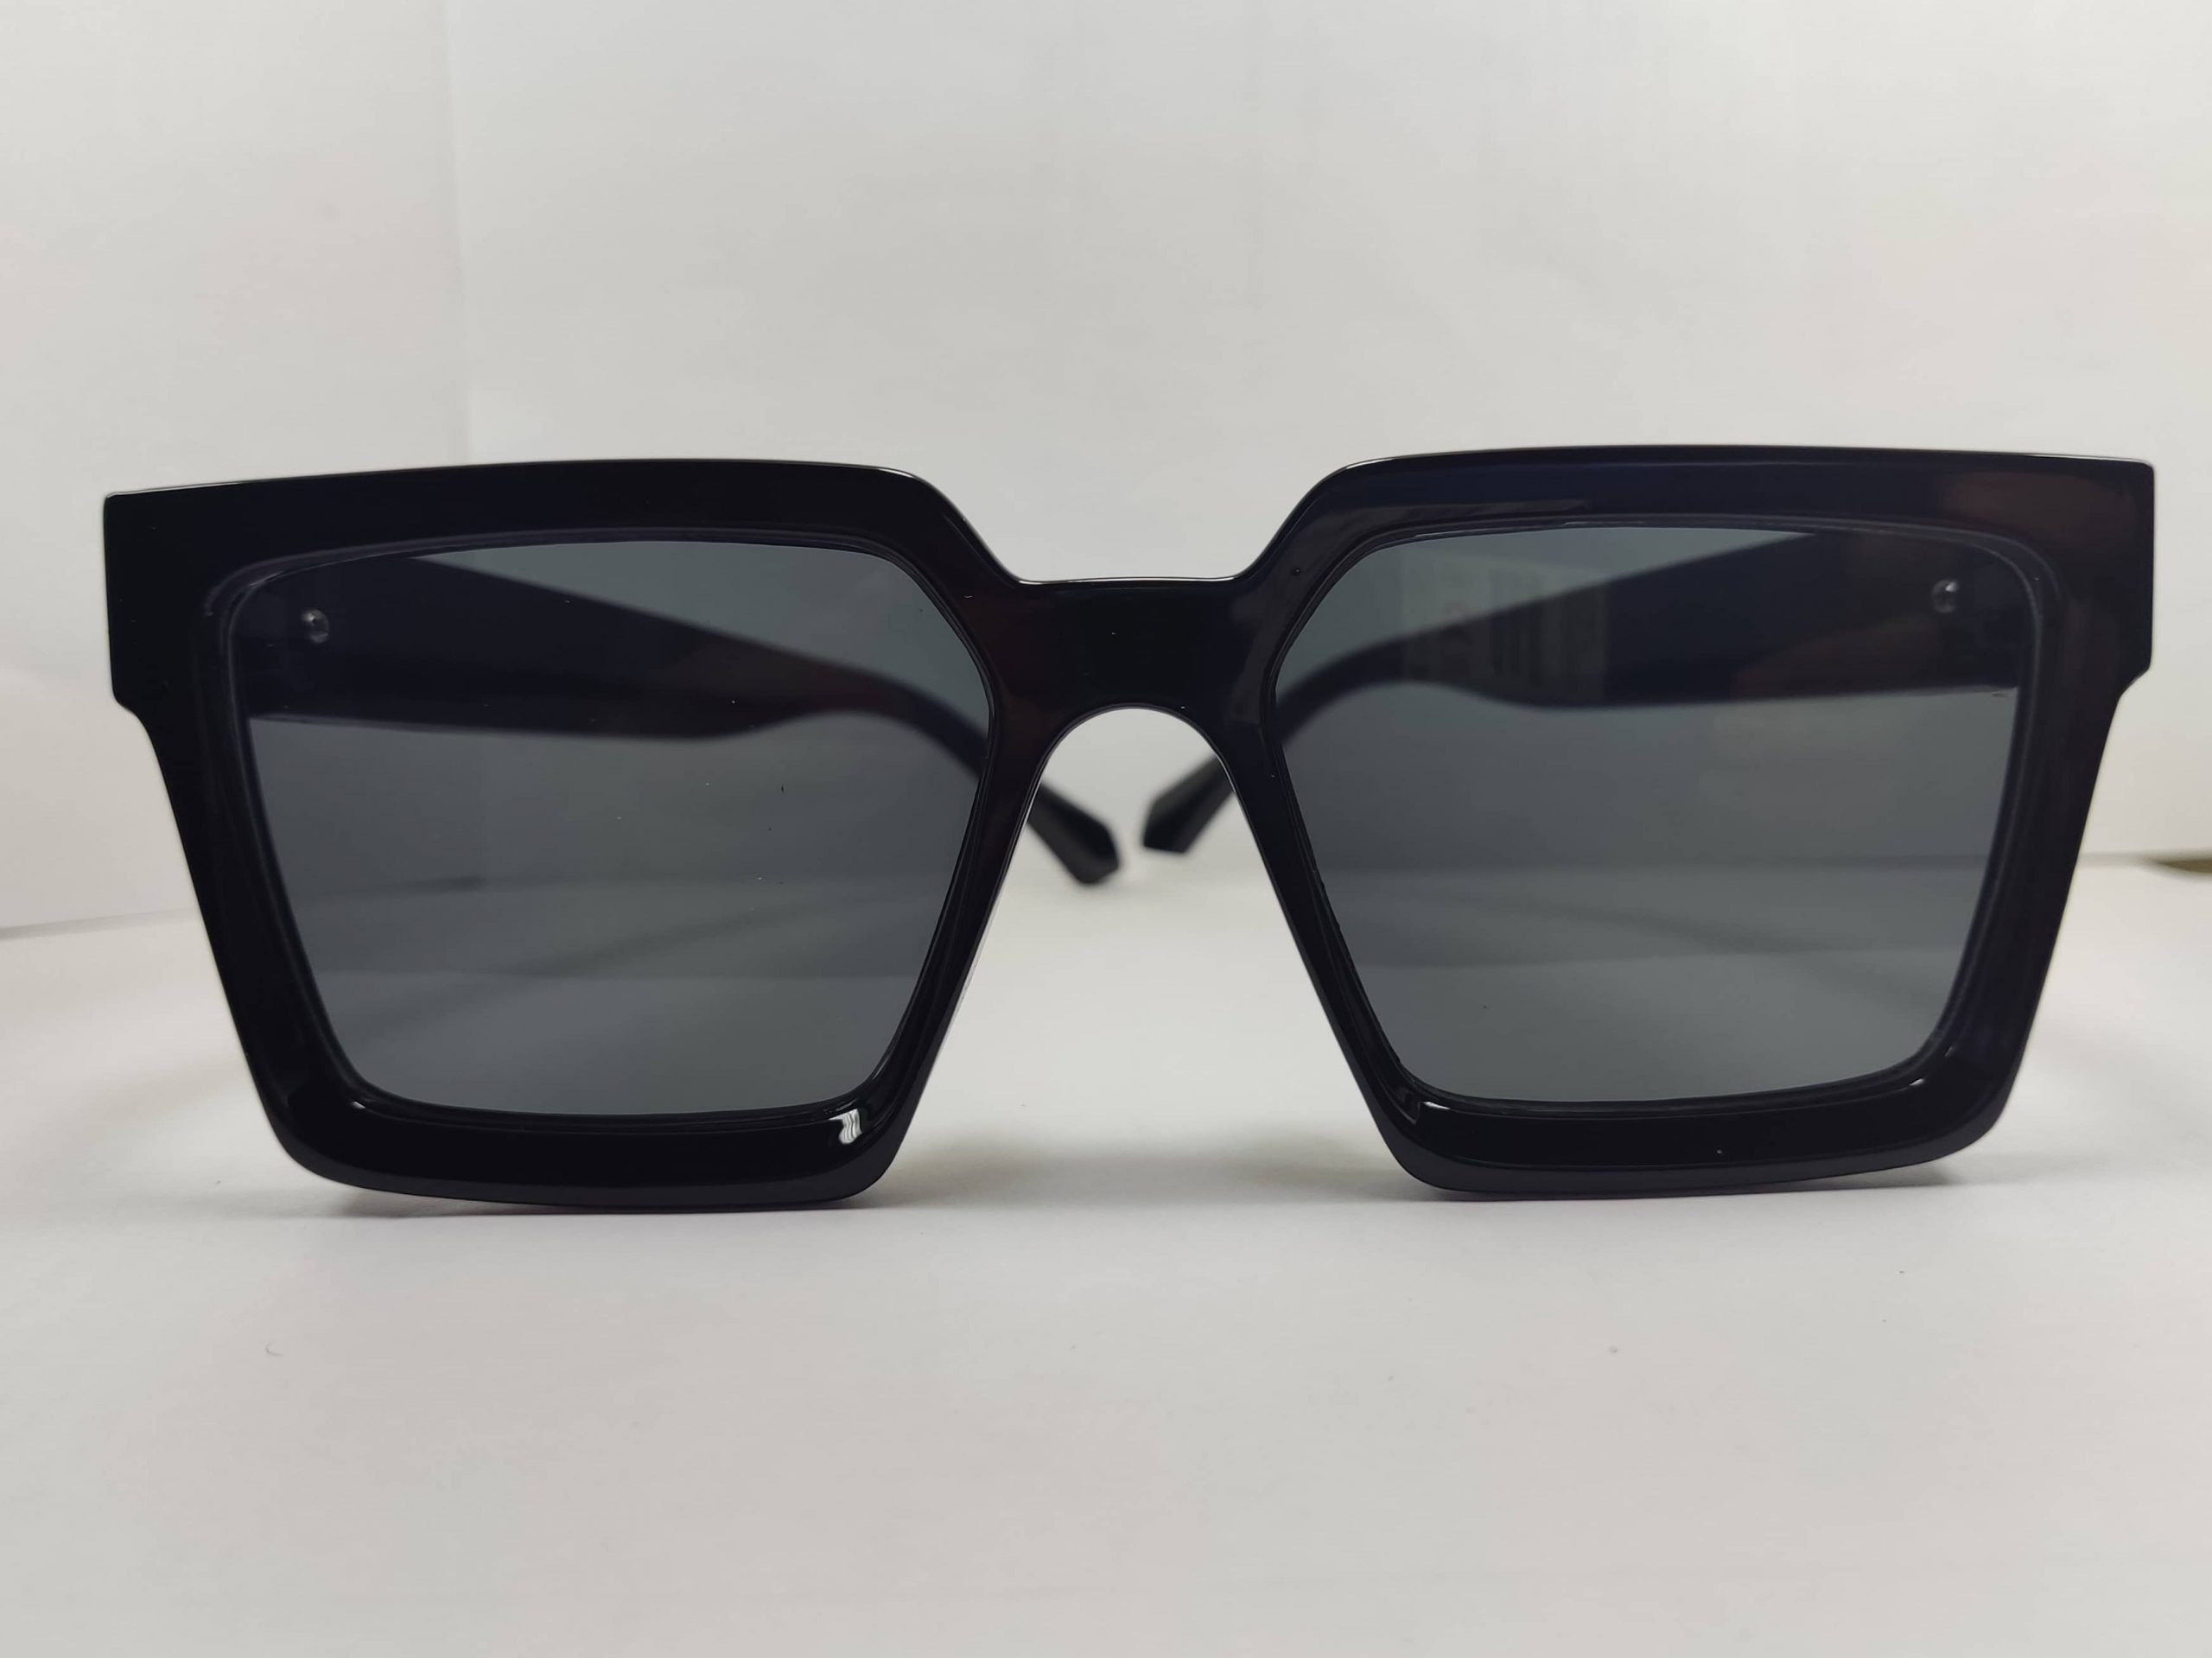 Louis Vuitton Z1961U LV Signature Round Sunglasses, Grey, One Size